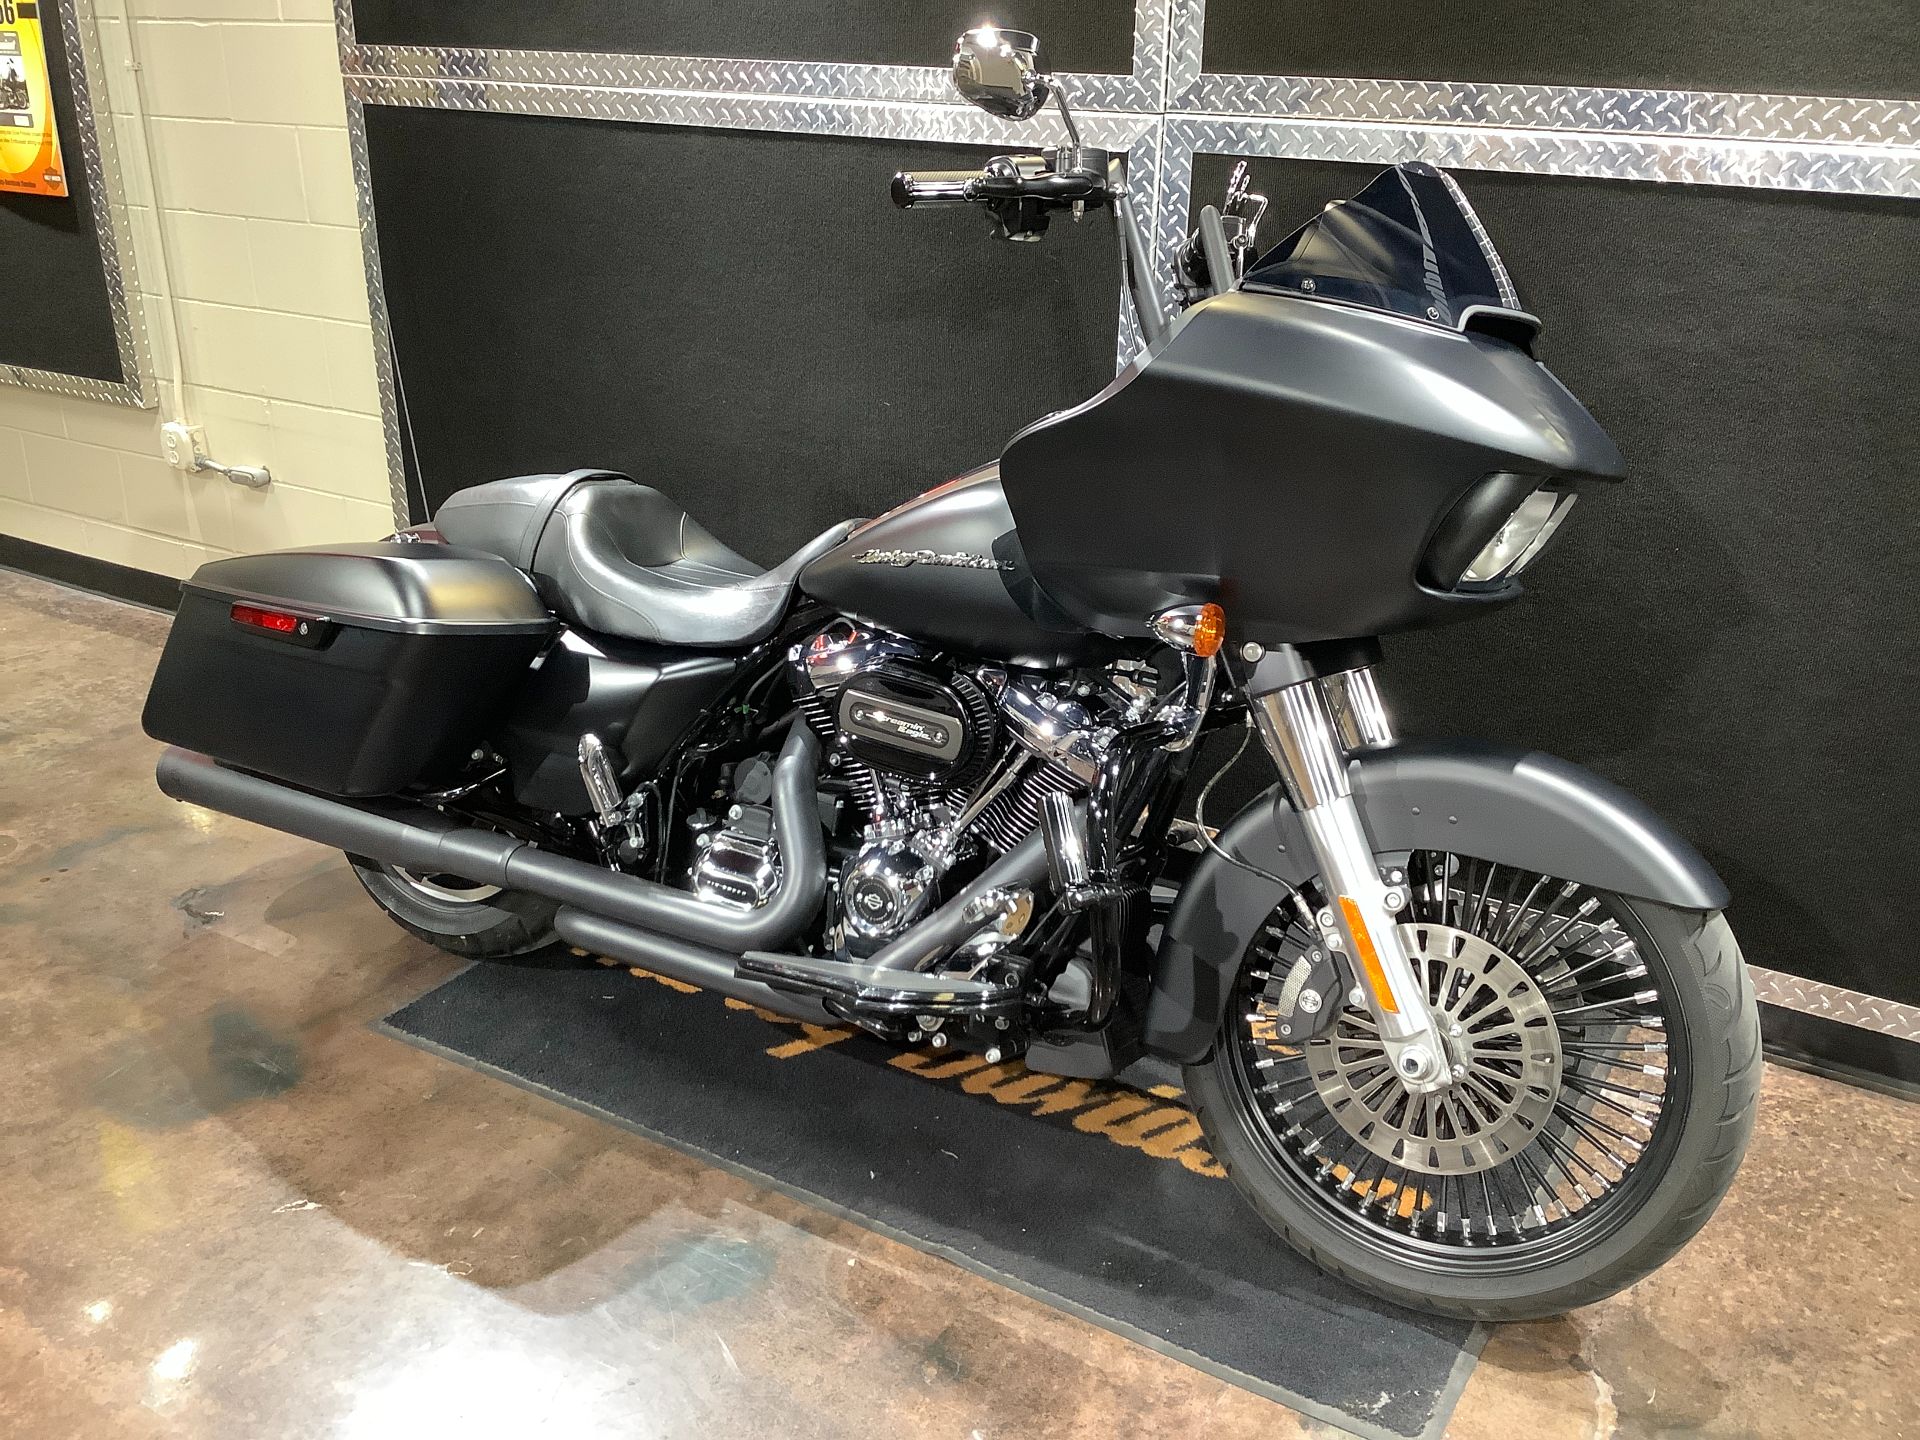 2017 Harley-Davidson Road Glide® Special in Burlington, Iowa - Photo 4